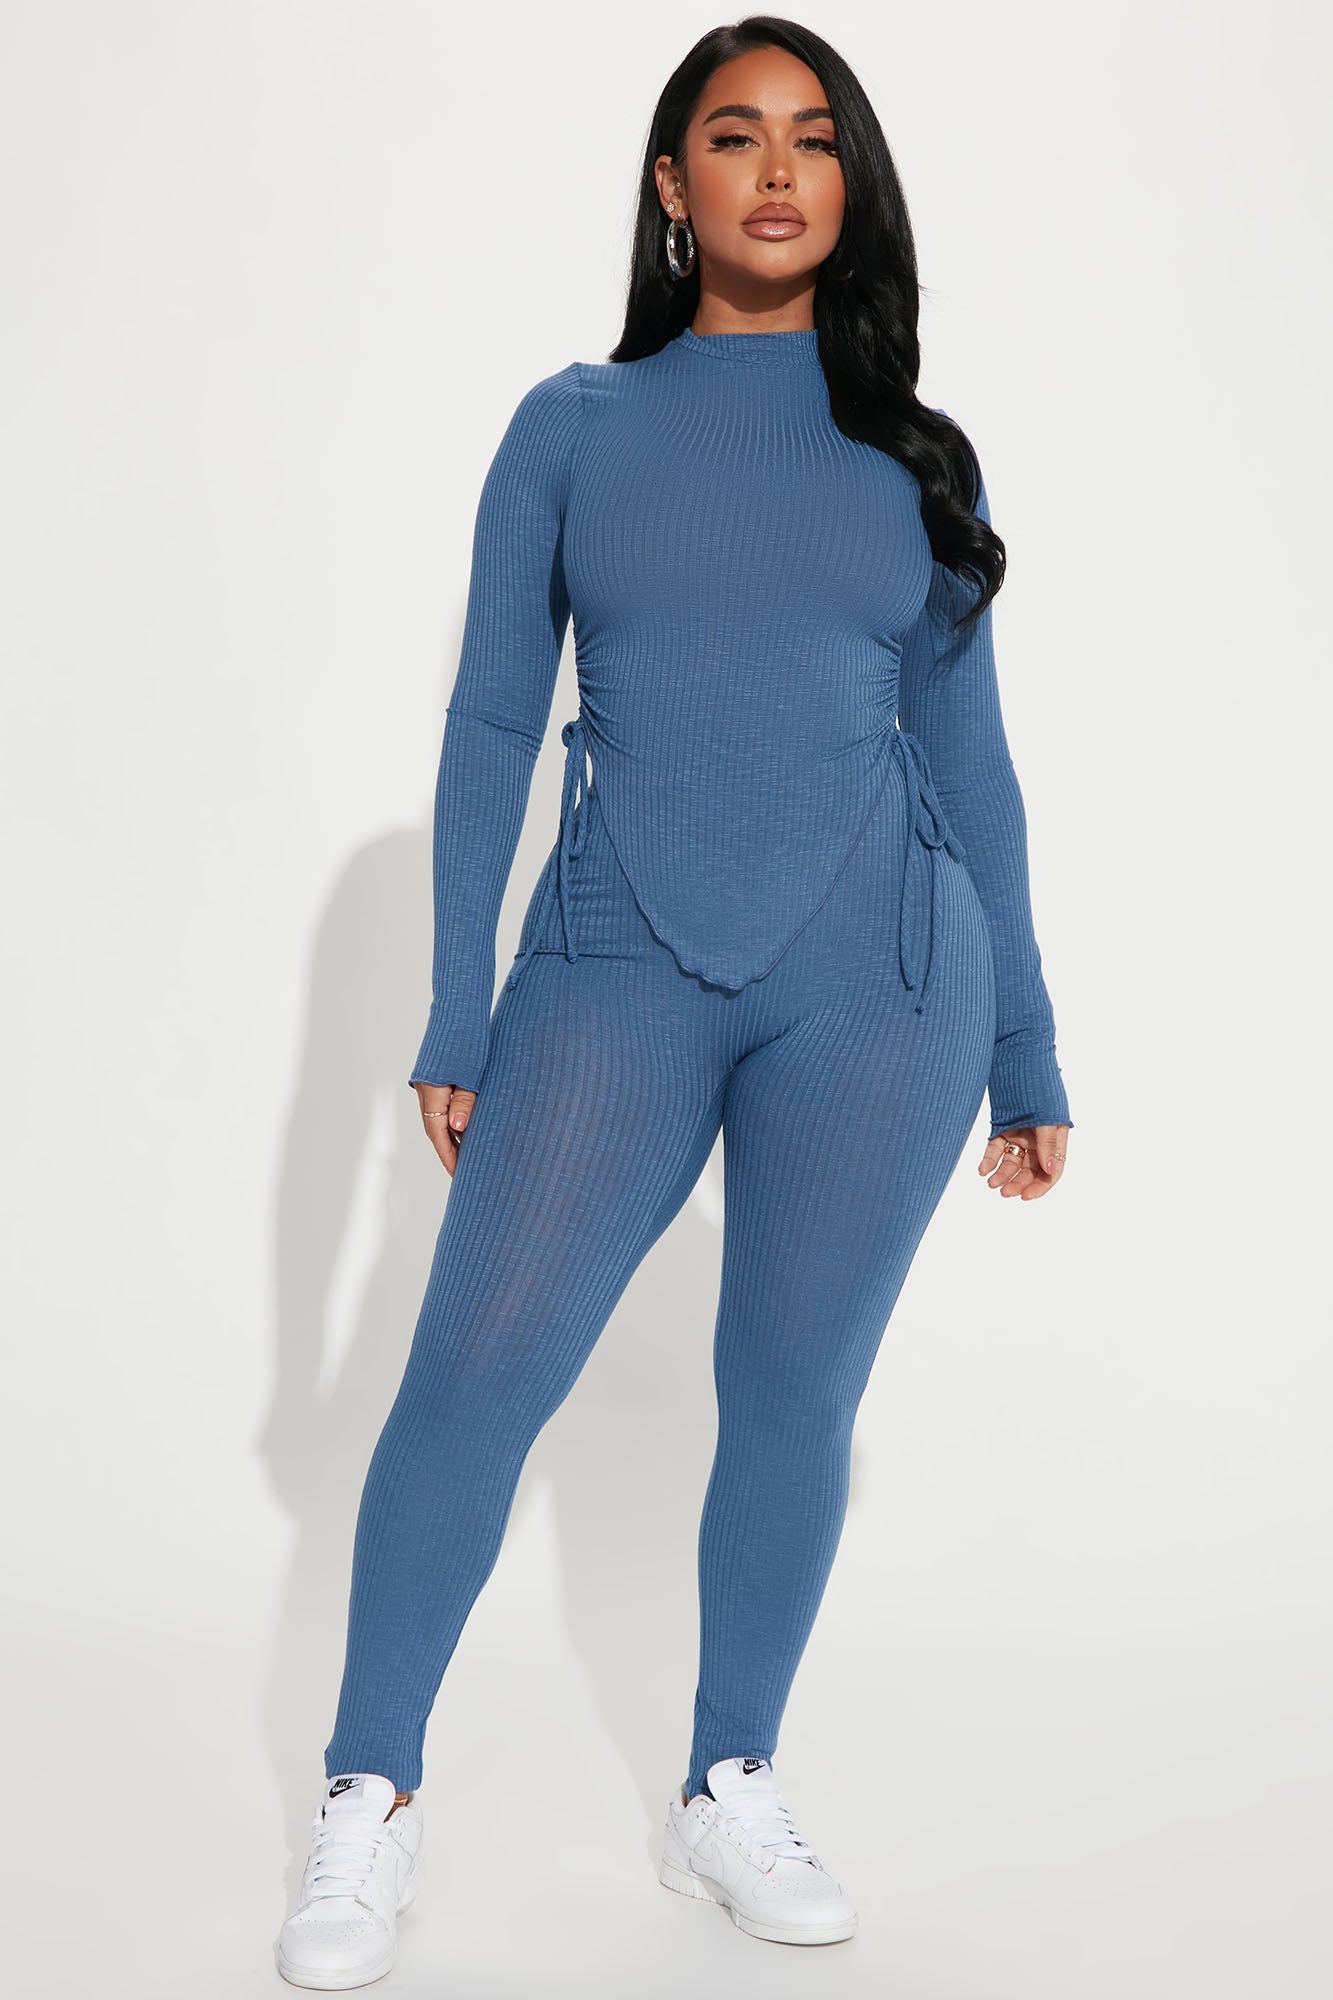 Kai Body Heat Legging Set - Blue, Fashion Nova, Matching Sets